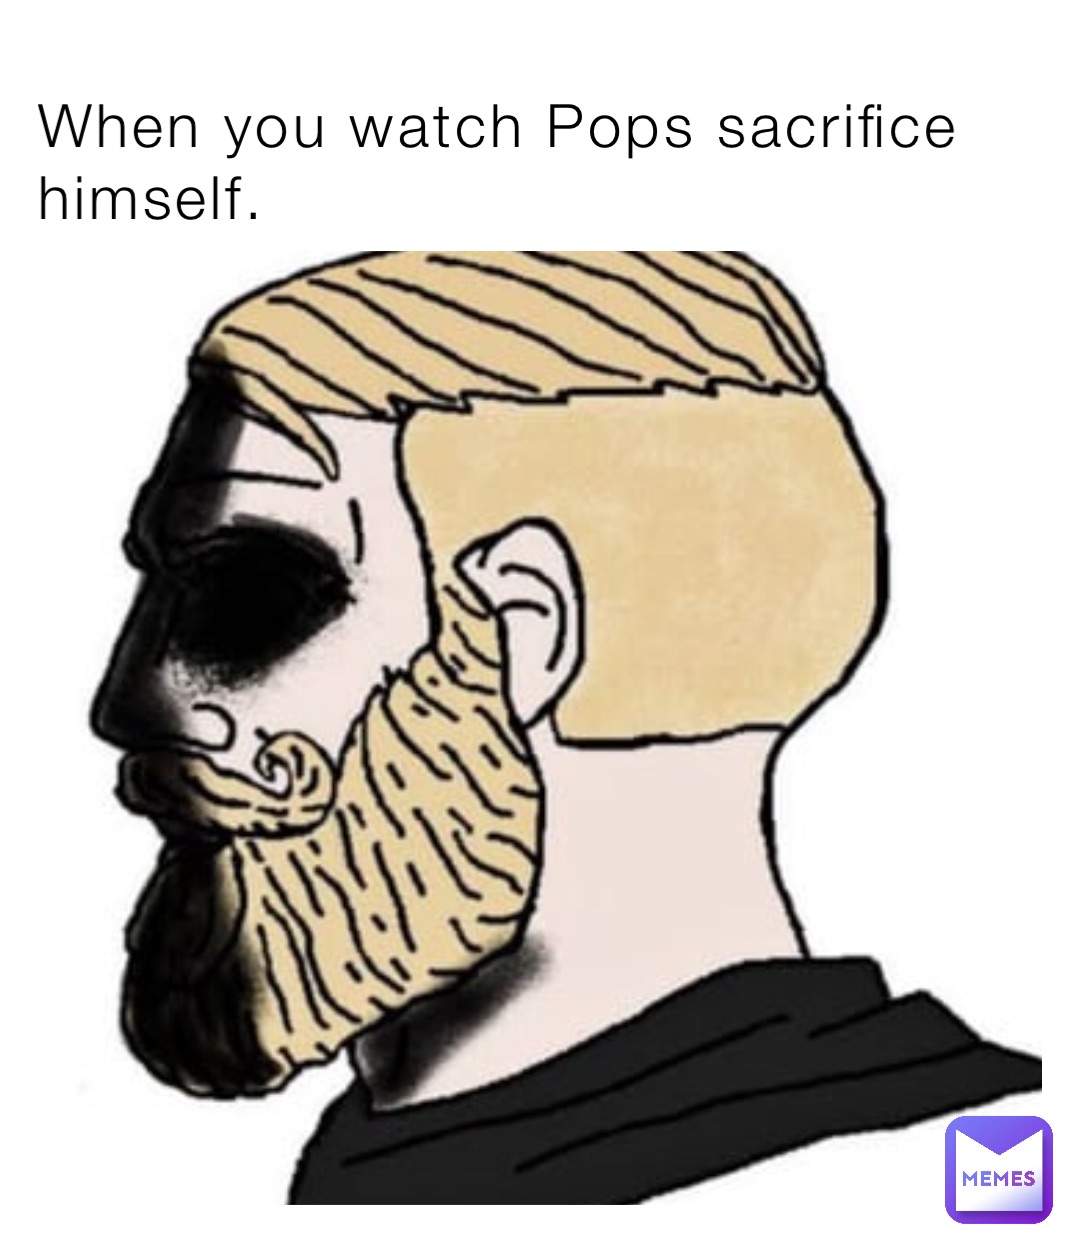 When you watch Pops sacrifice himself.